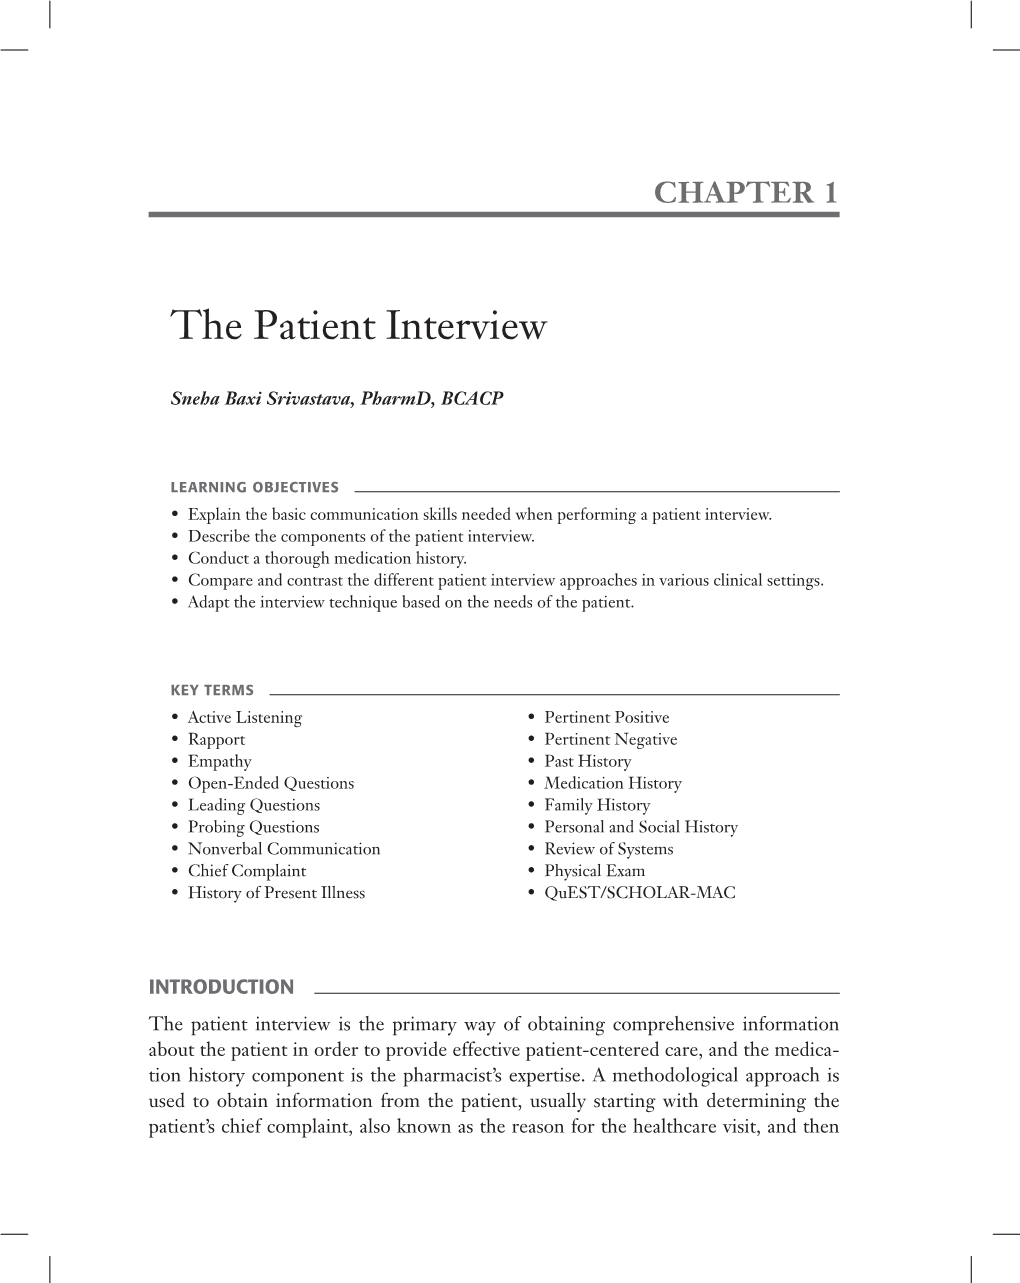 The Patient Interview